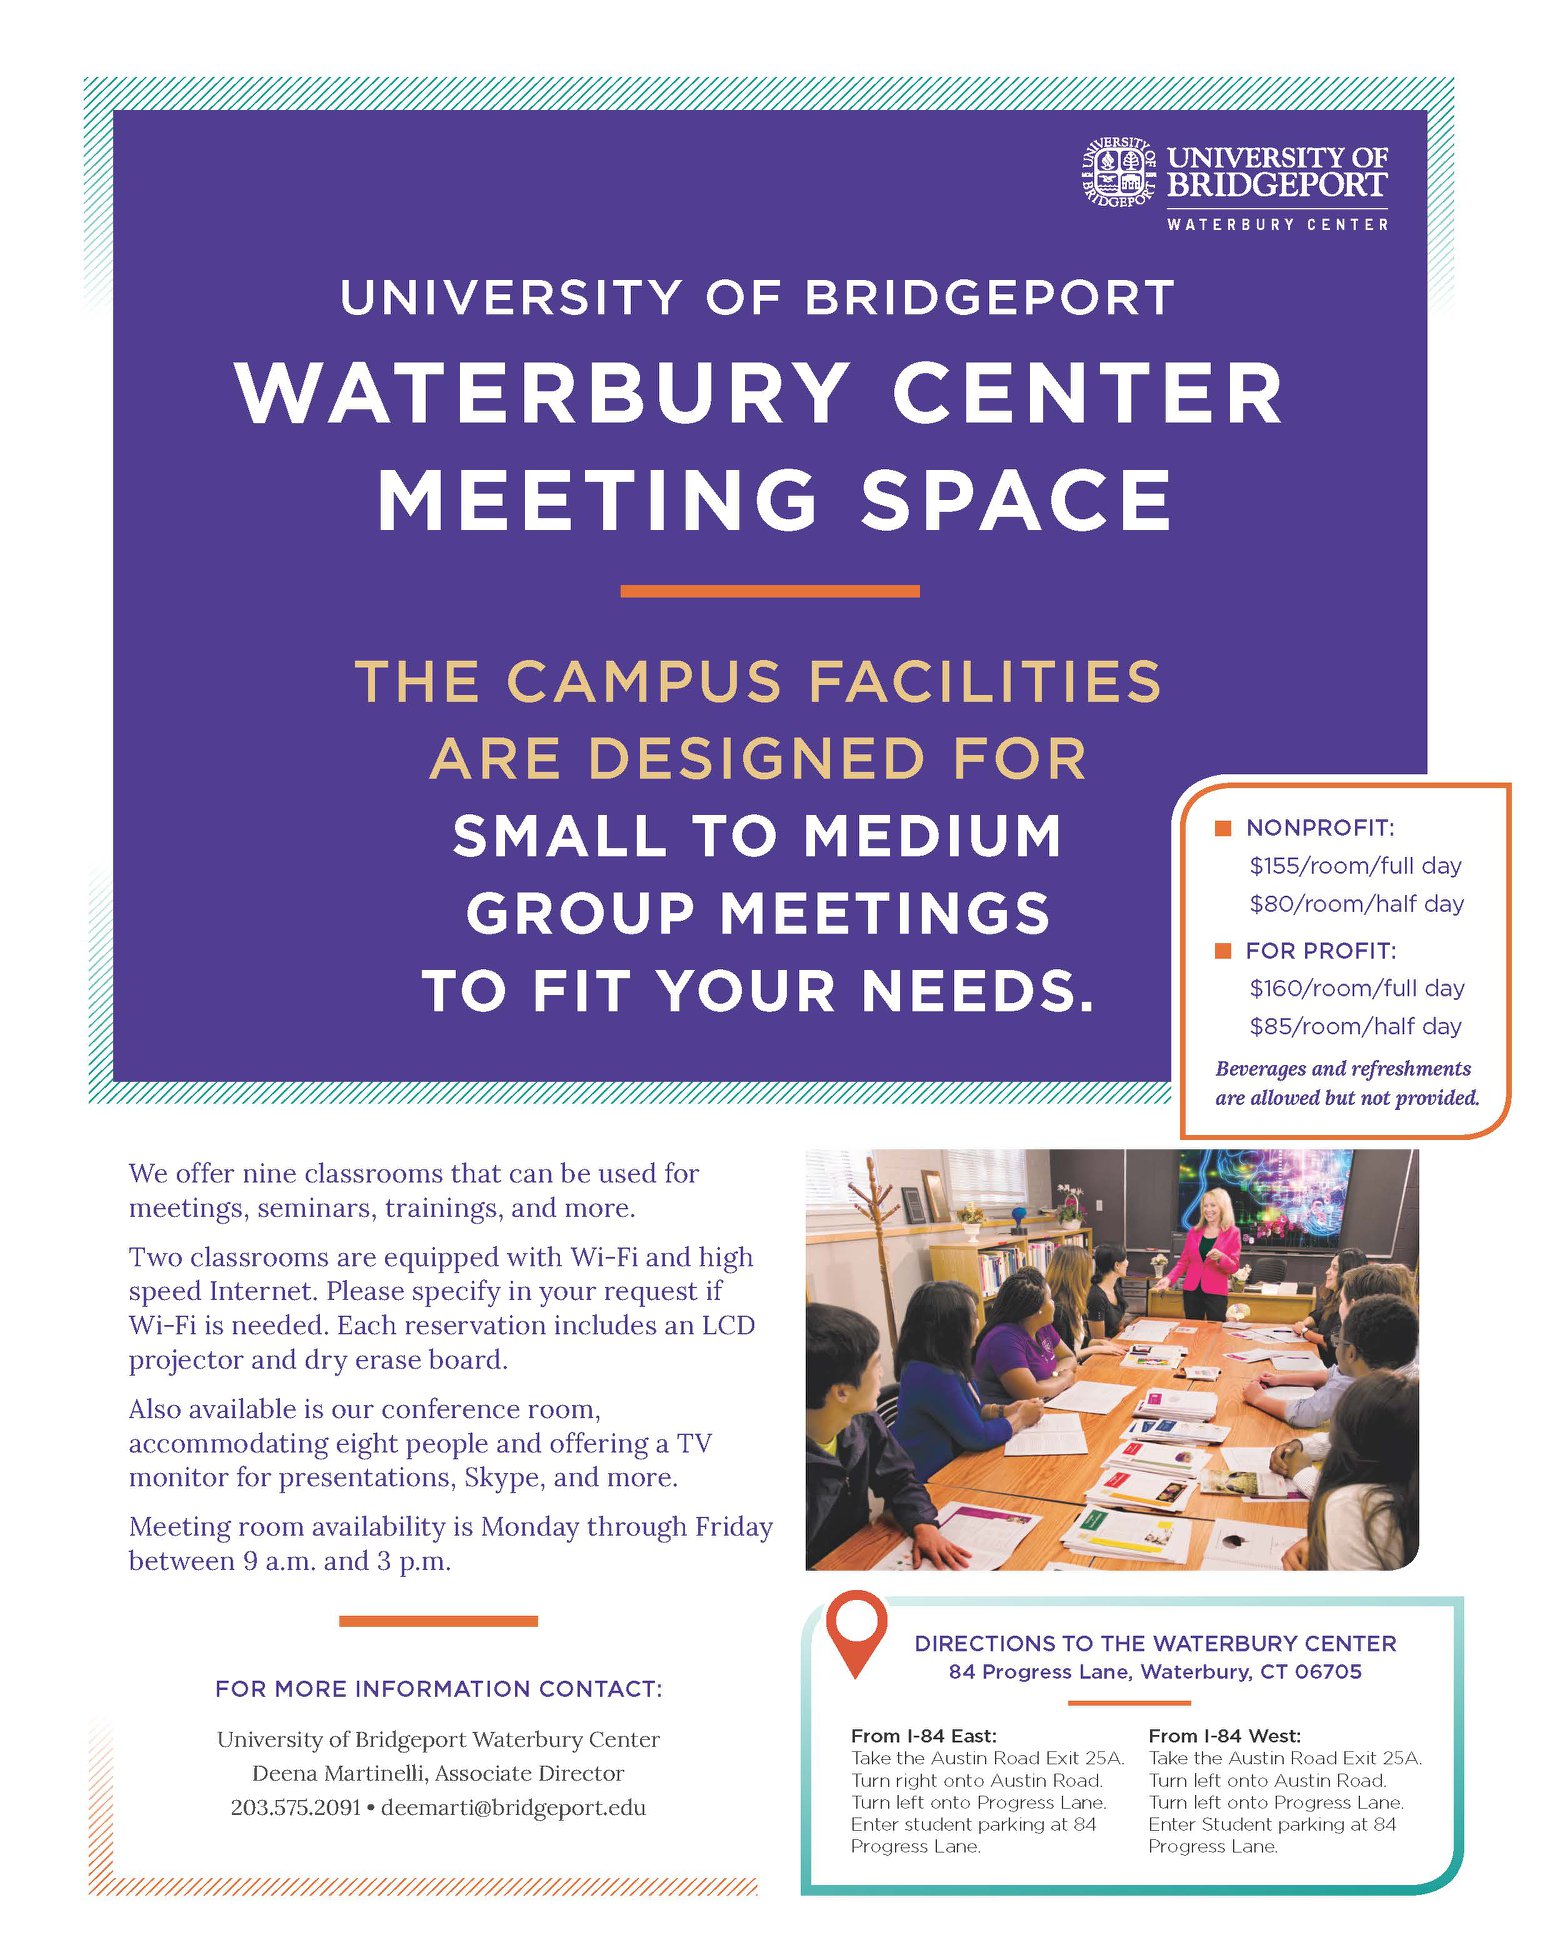 Waterbury Center Meeting Space Details